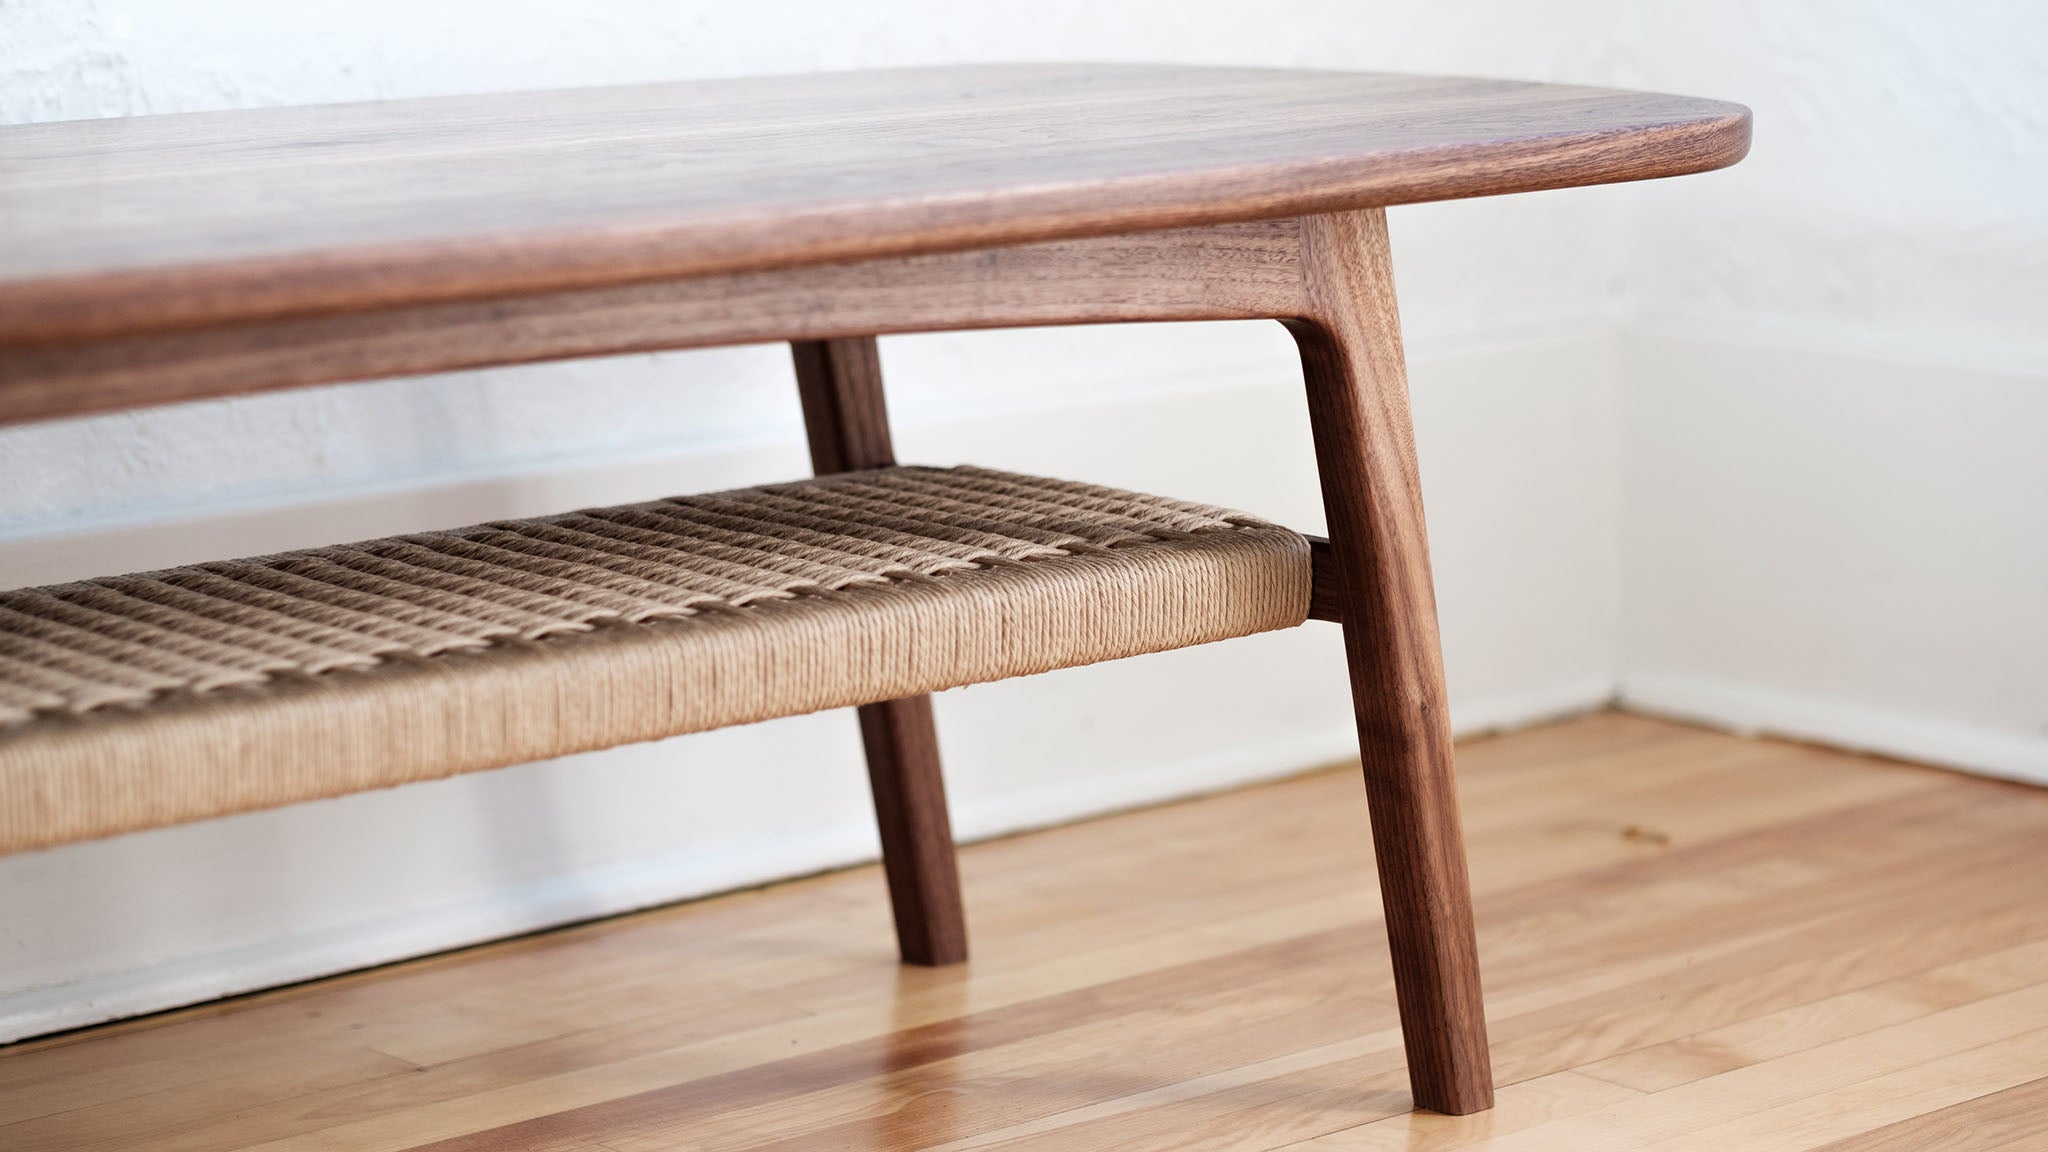 Mid century walnut coffee table, danish cord lower shelf, splayed legs, close up